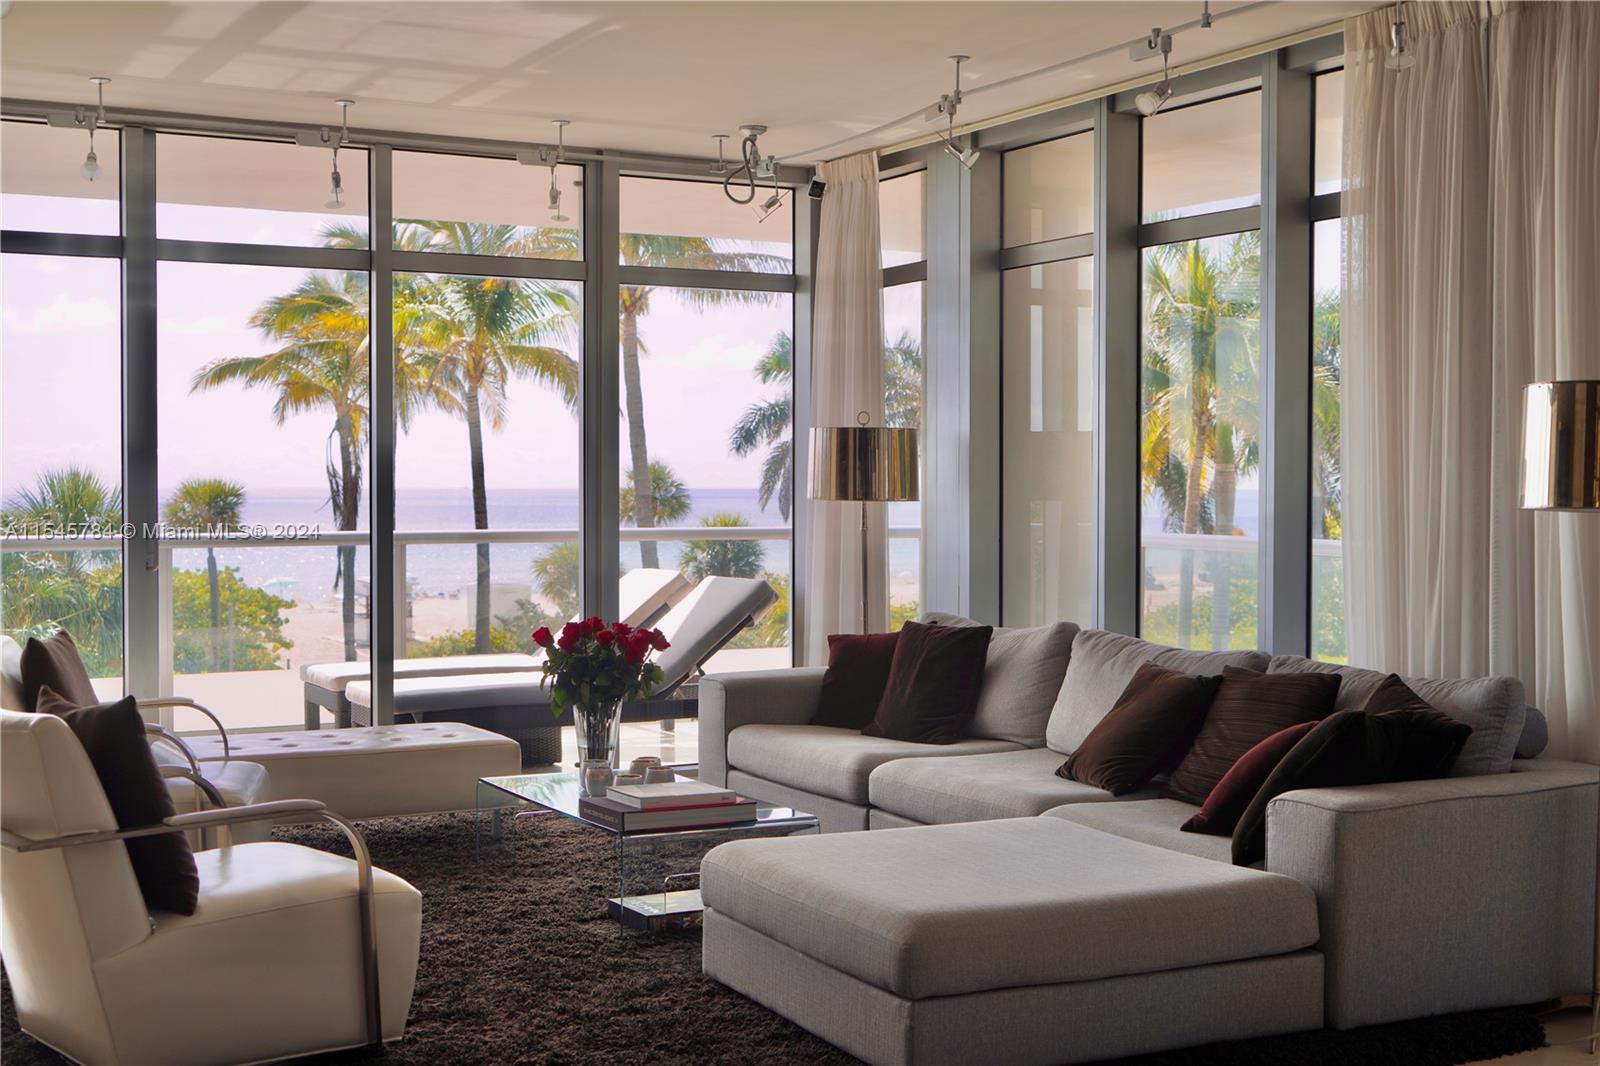 Rental Property at 3737 Collins Ave S-302, Miami Beach, Miami-Dade County, Florida - Bedrooms: 3 
Bathrooms: 4  - $13,000 MO.